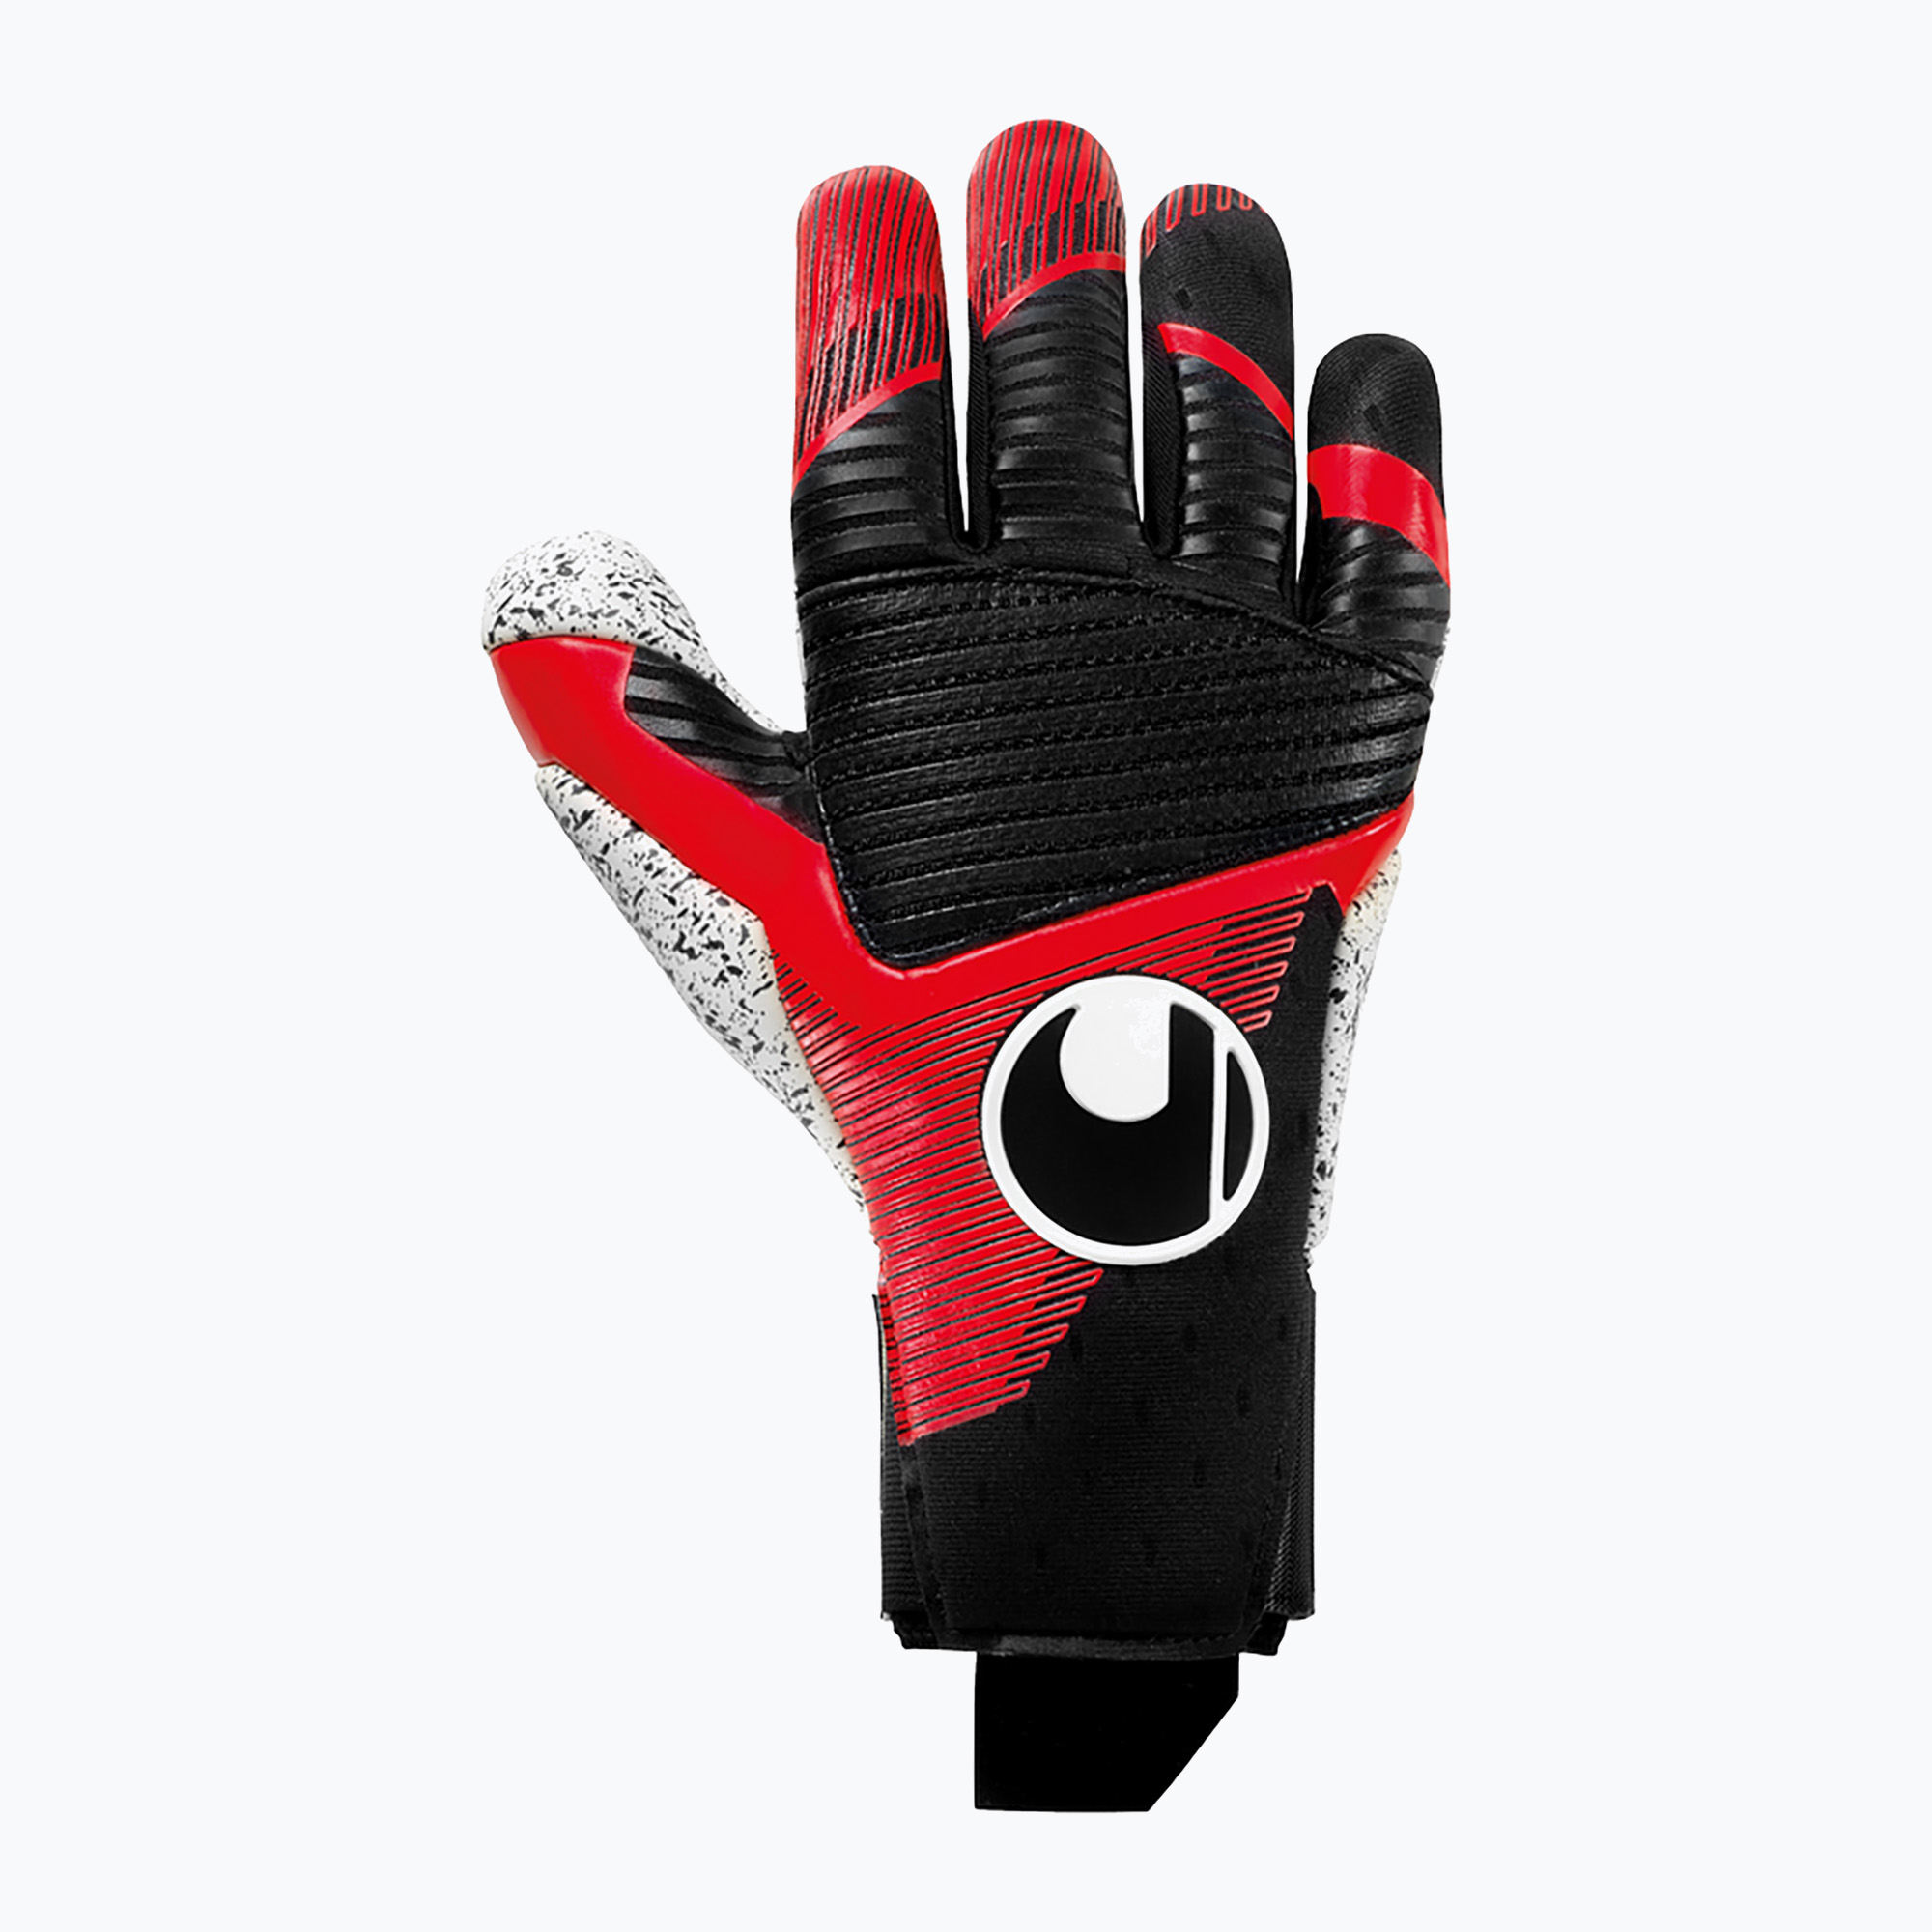 Uhlsport Powerline Supergrip  Reflex вратарски ръкавици черни/червени/бели